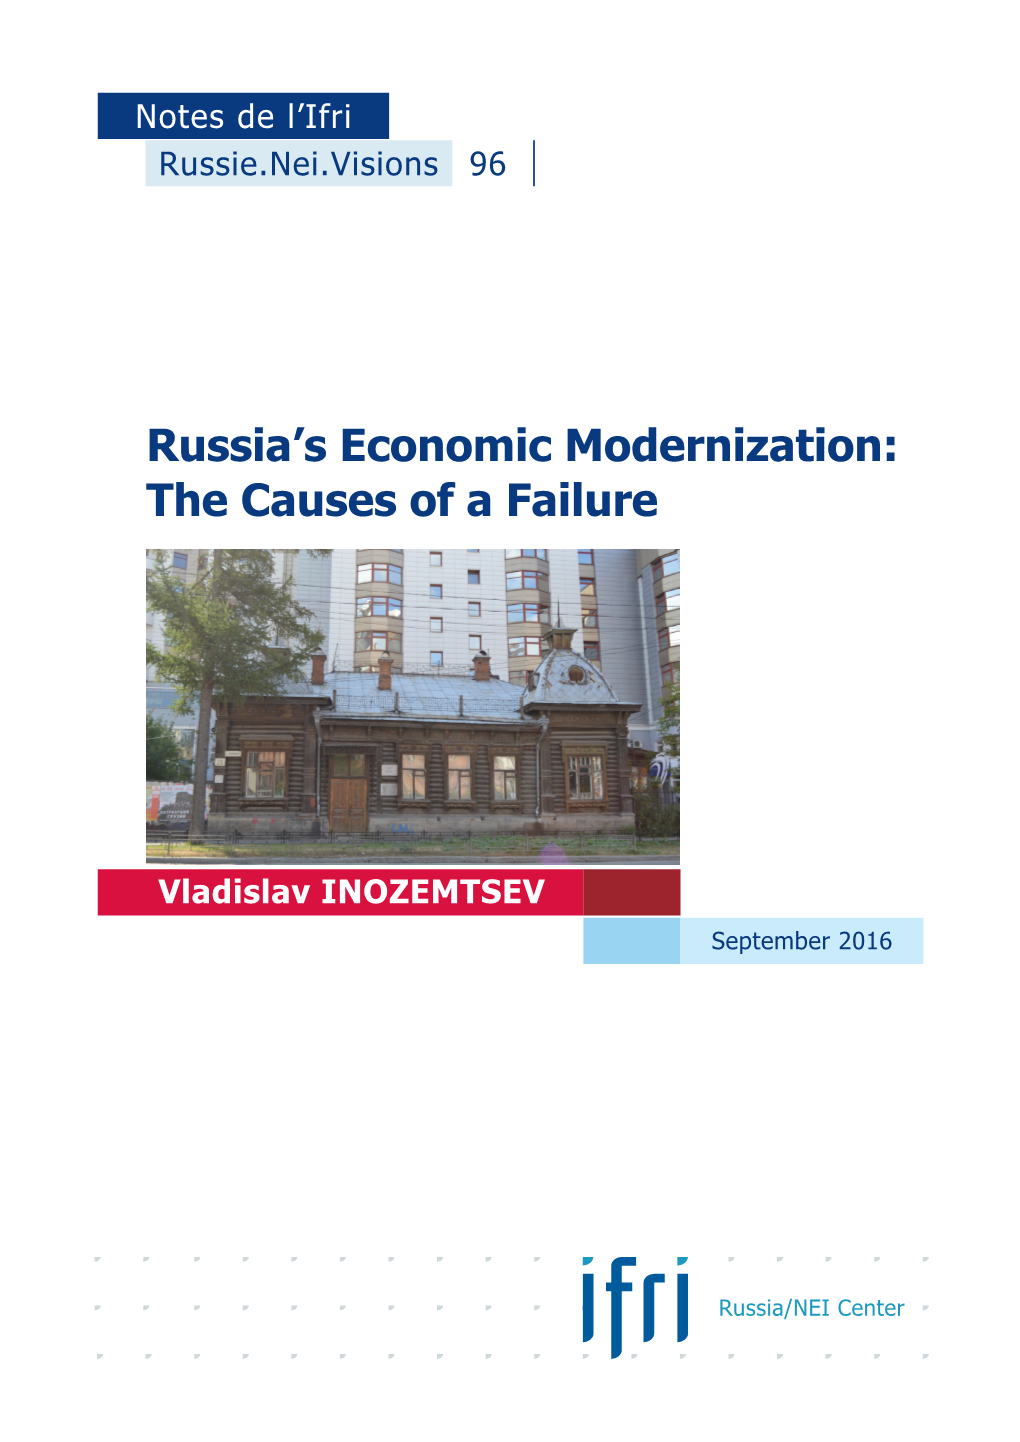 V. Inozemtsev, “Russia's Economic Modernization: the Causes of A